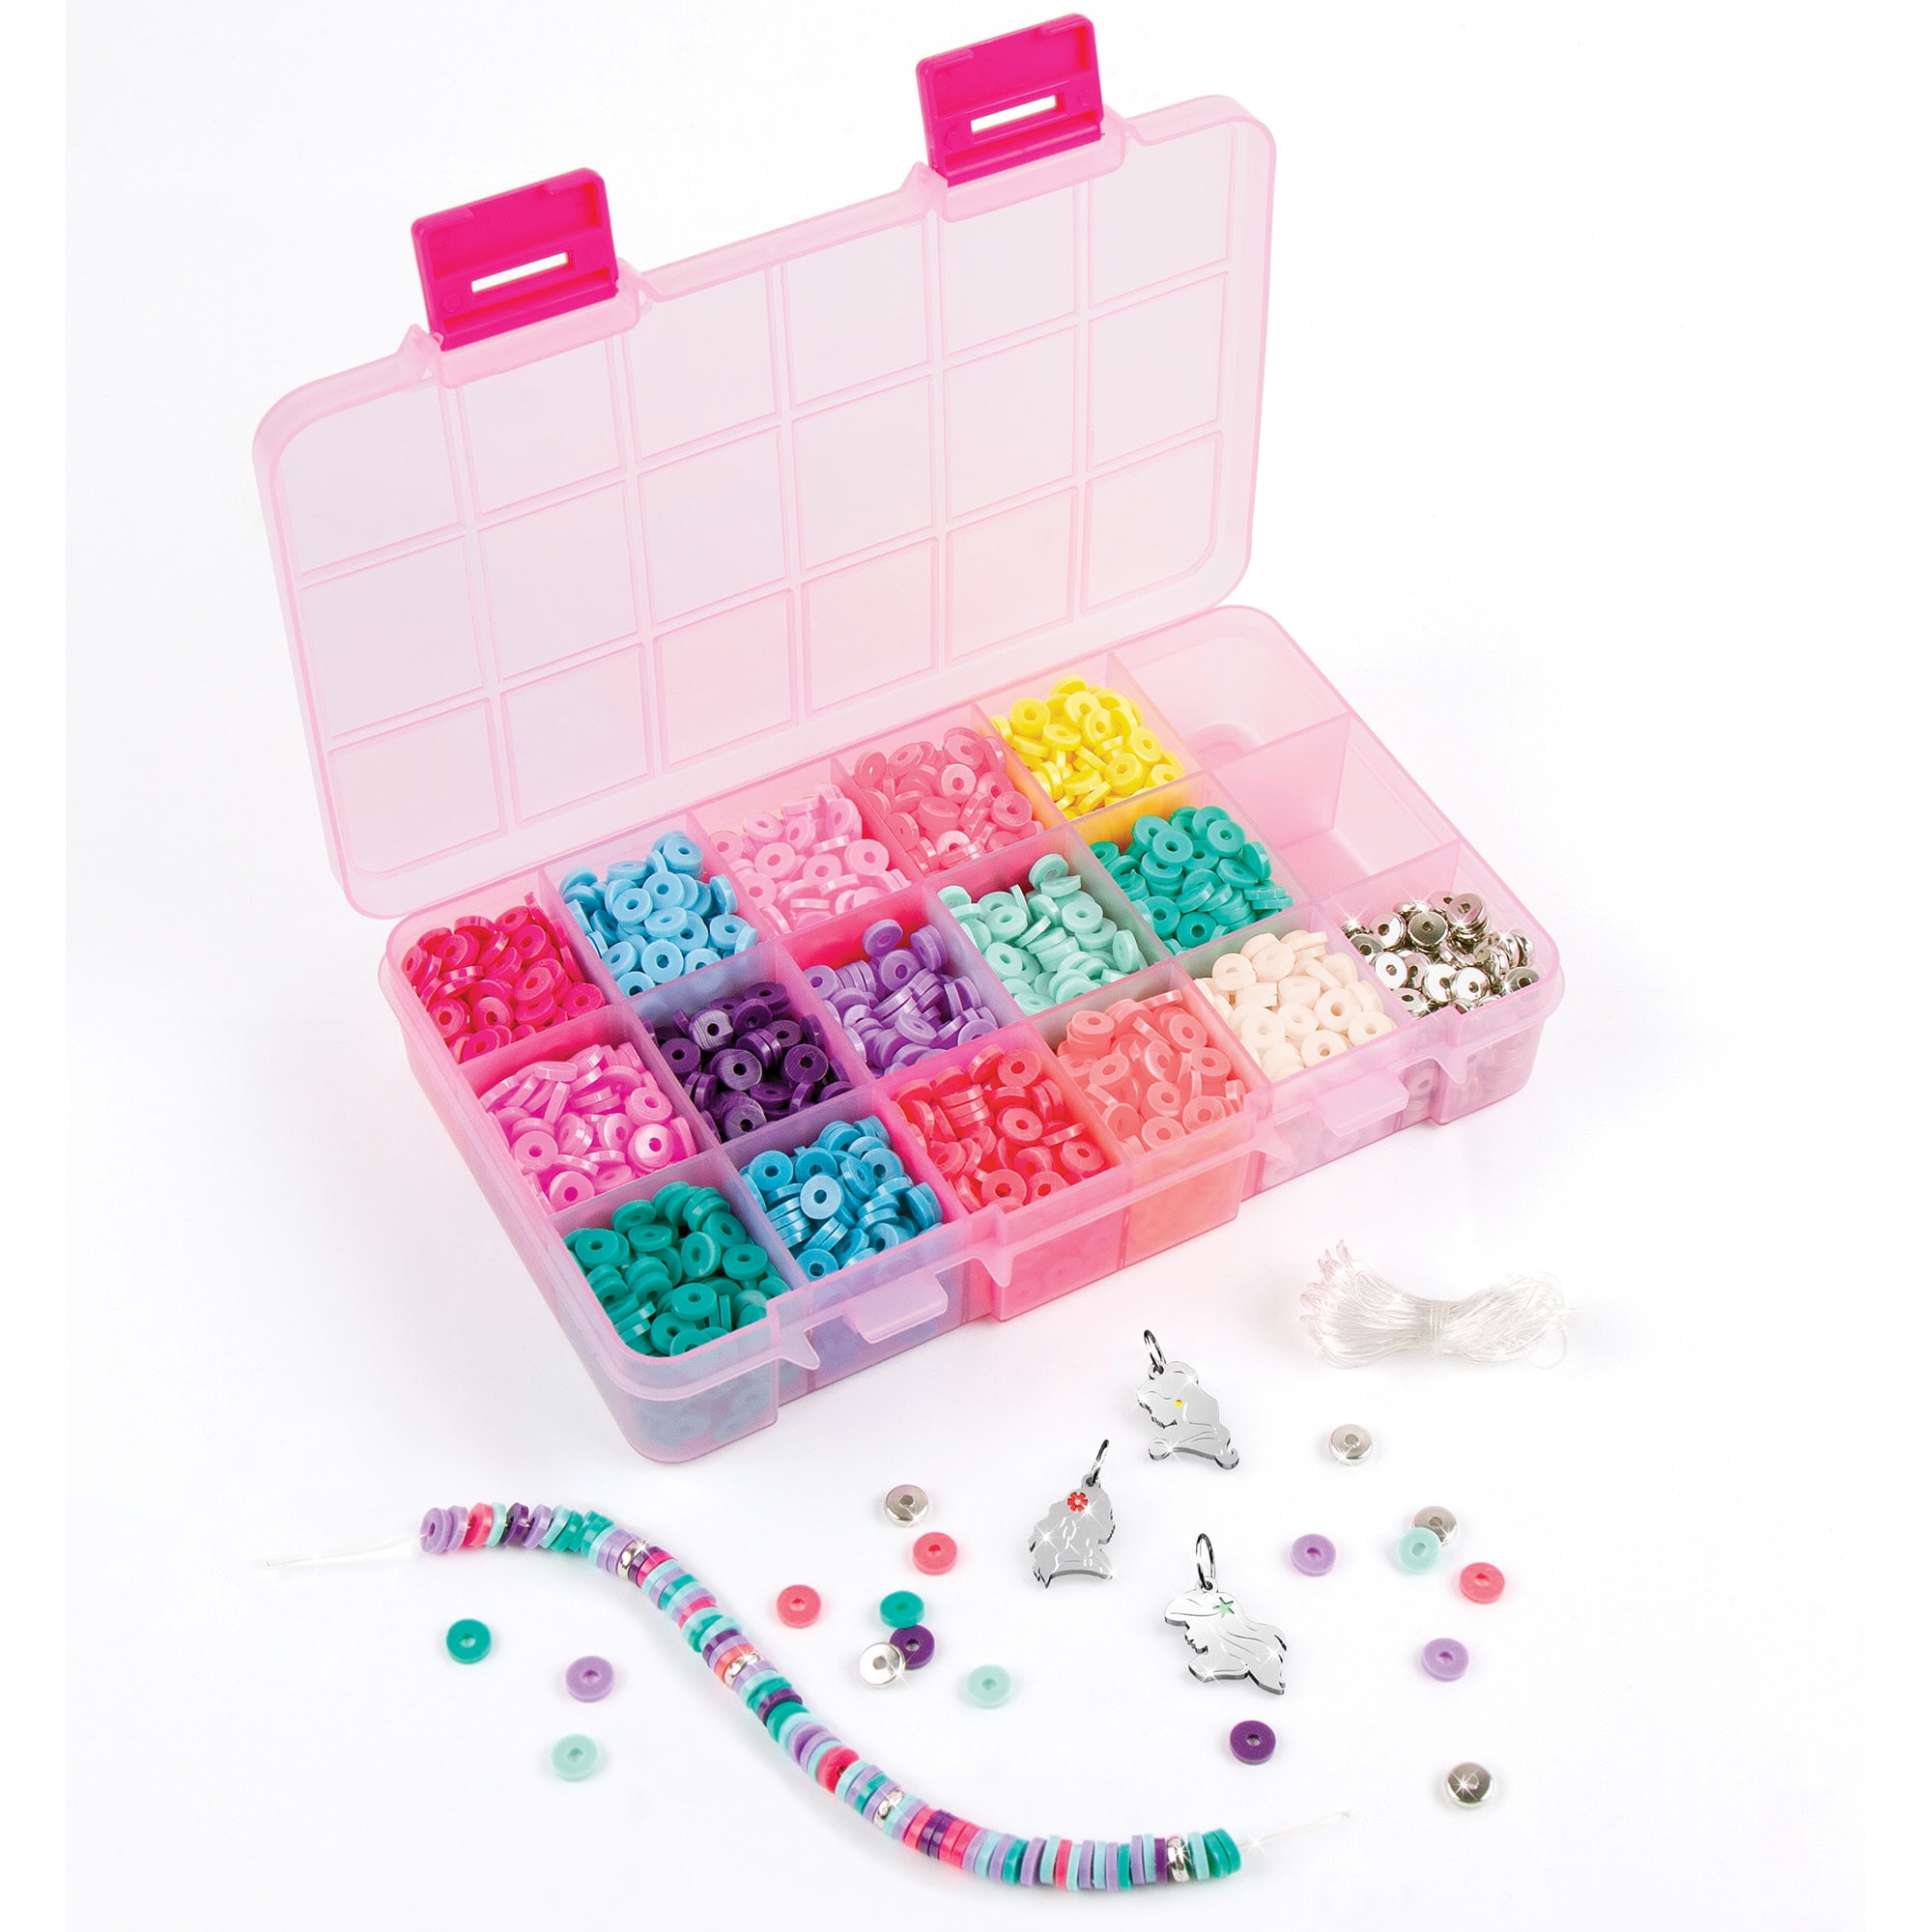 Make It Real Disney Princess Royal Rounds Heishi Beads Charm Set - Disney  Princess Craft Kit with Disney Charms & Beads for Jewelry Making - DIY  Disney Jewelry …